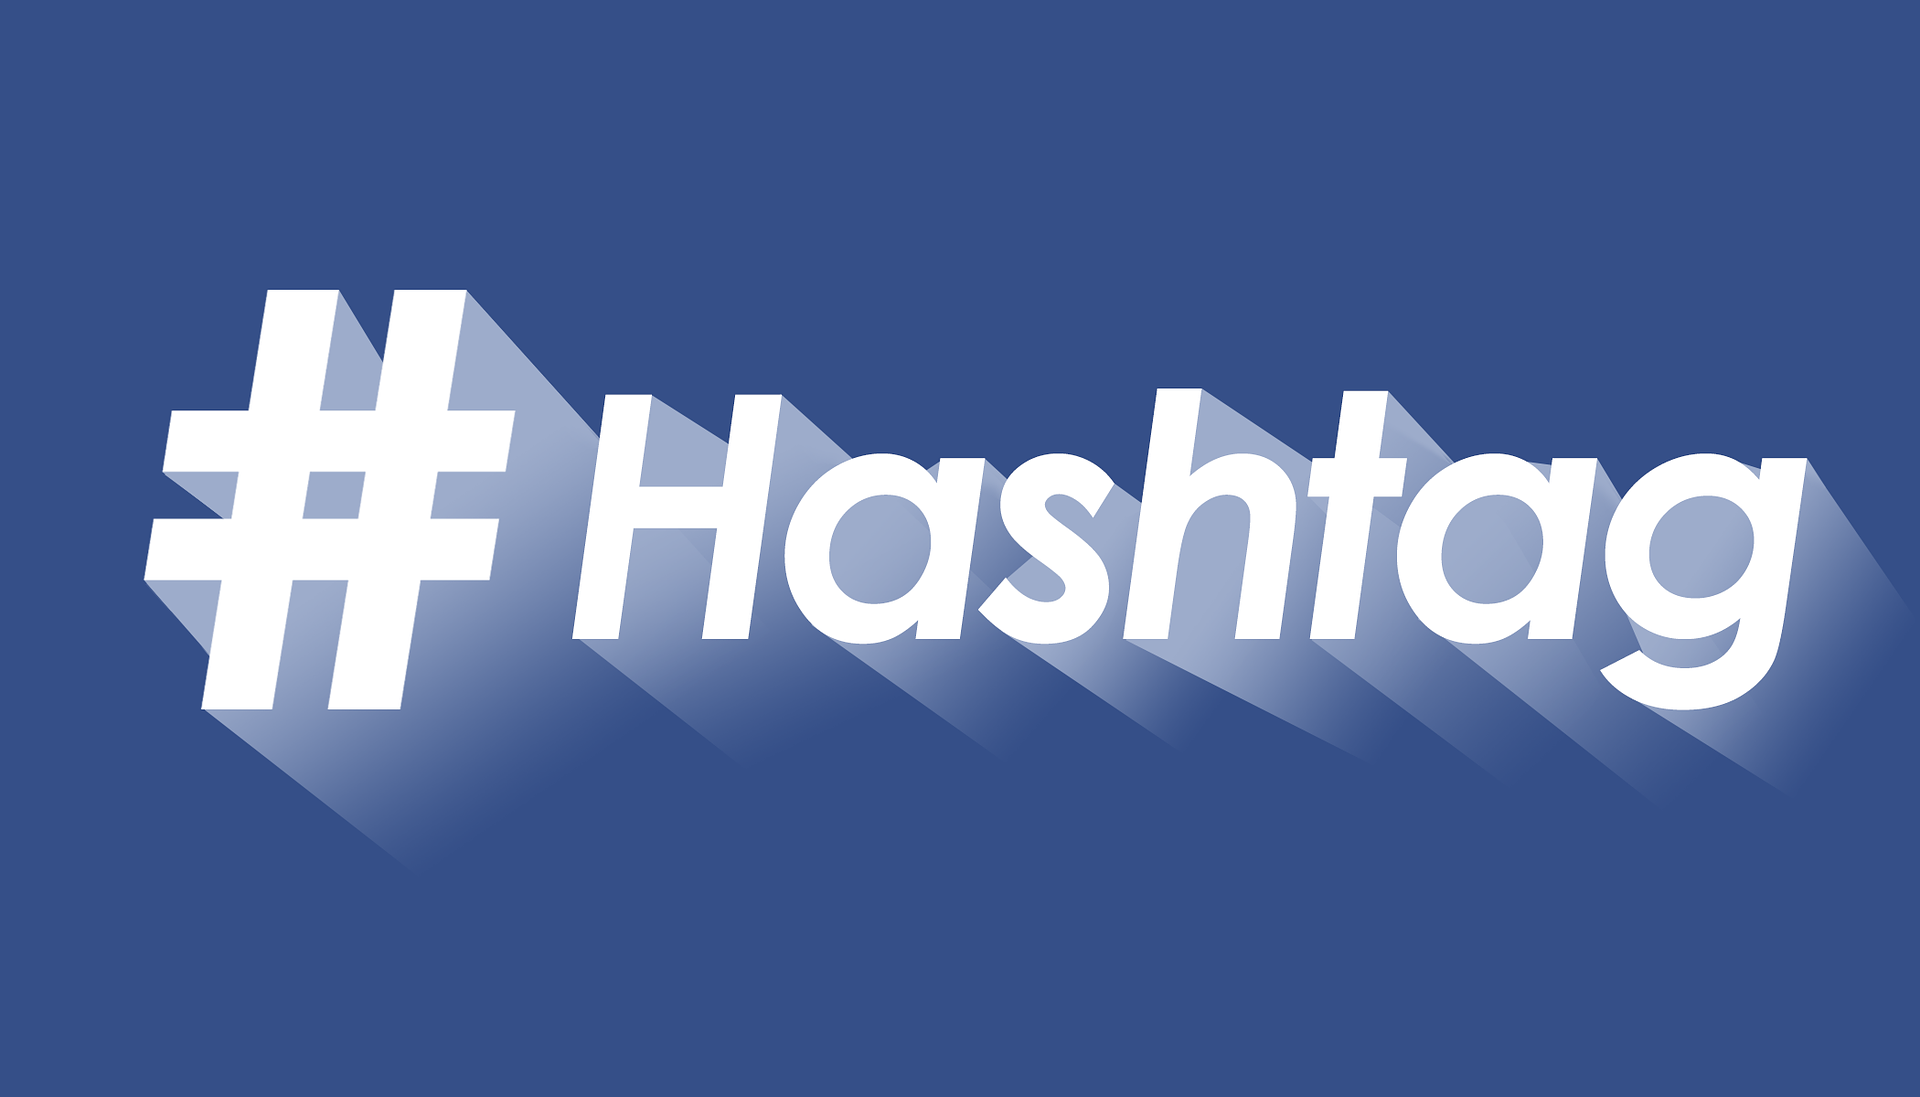 Hashtag campaign marketing